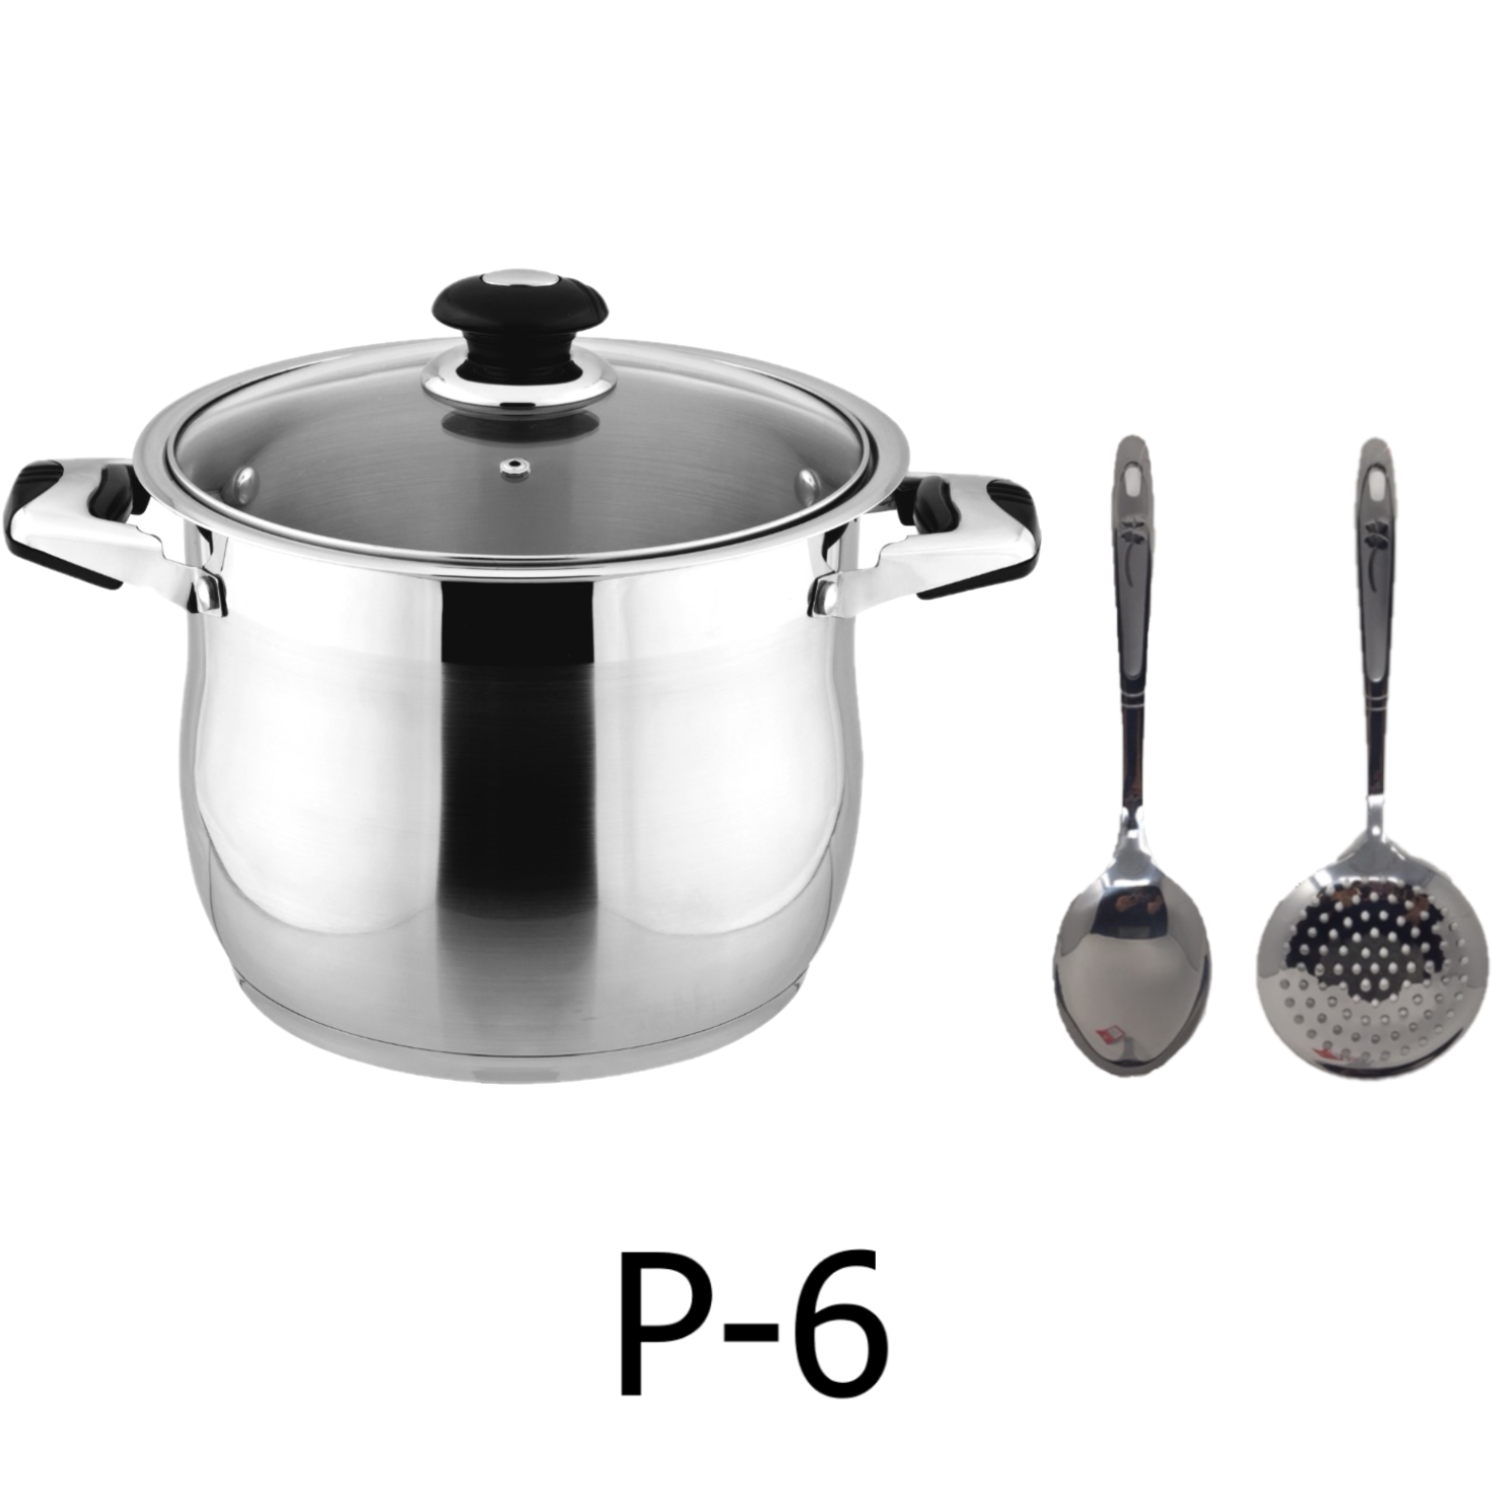 Cook N Home Stockpot Large pot Sauce Pot Induction Pot With Lid Profes